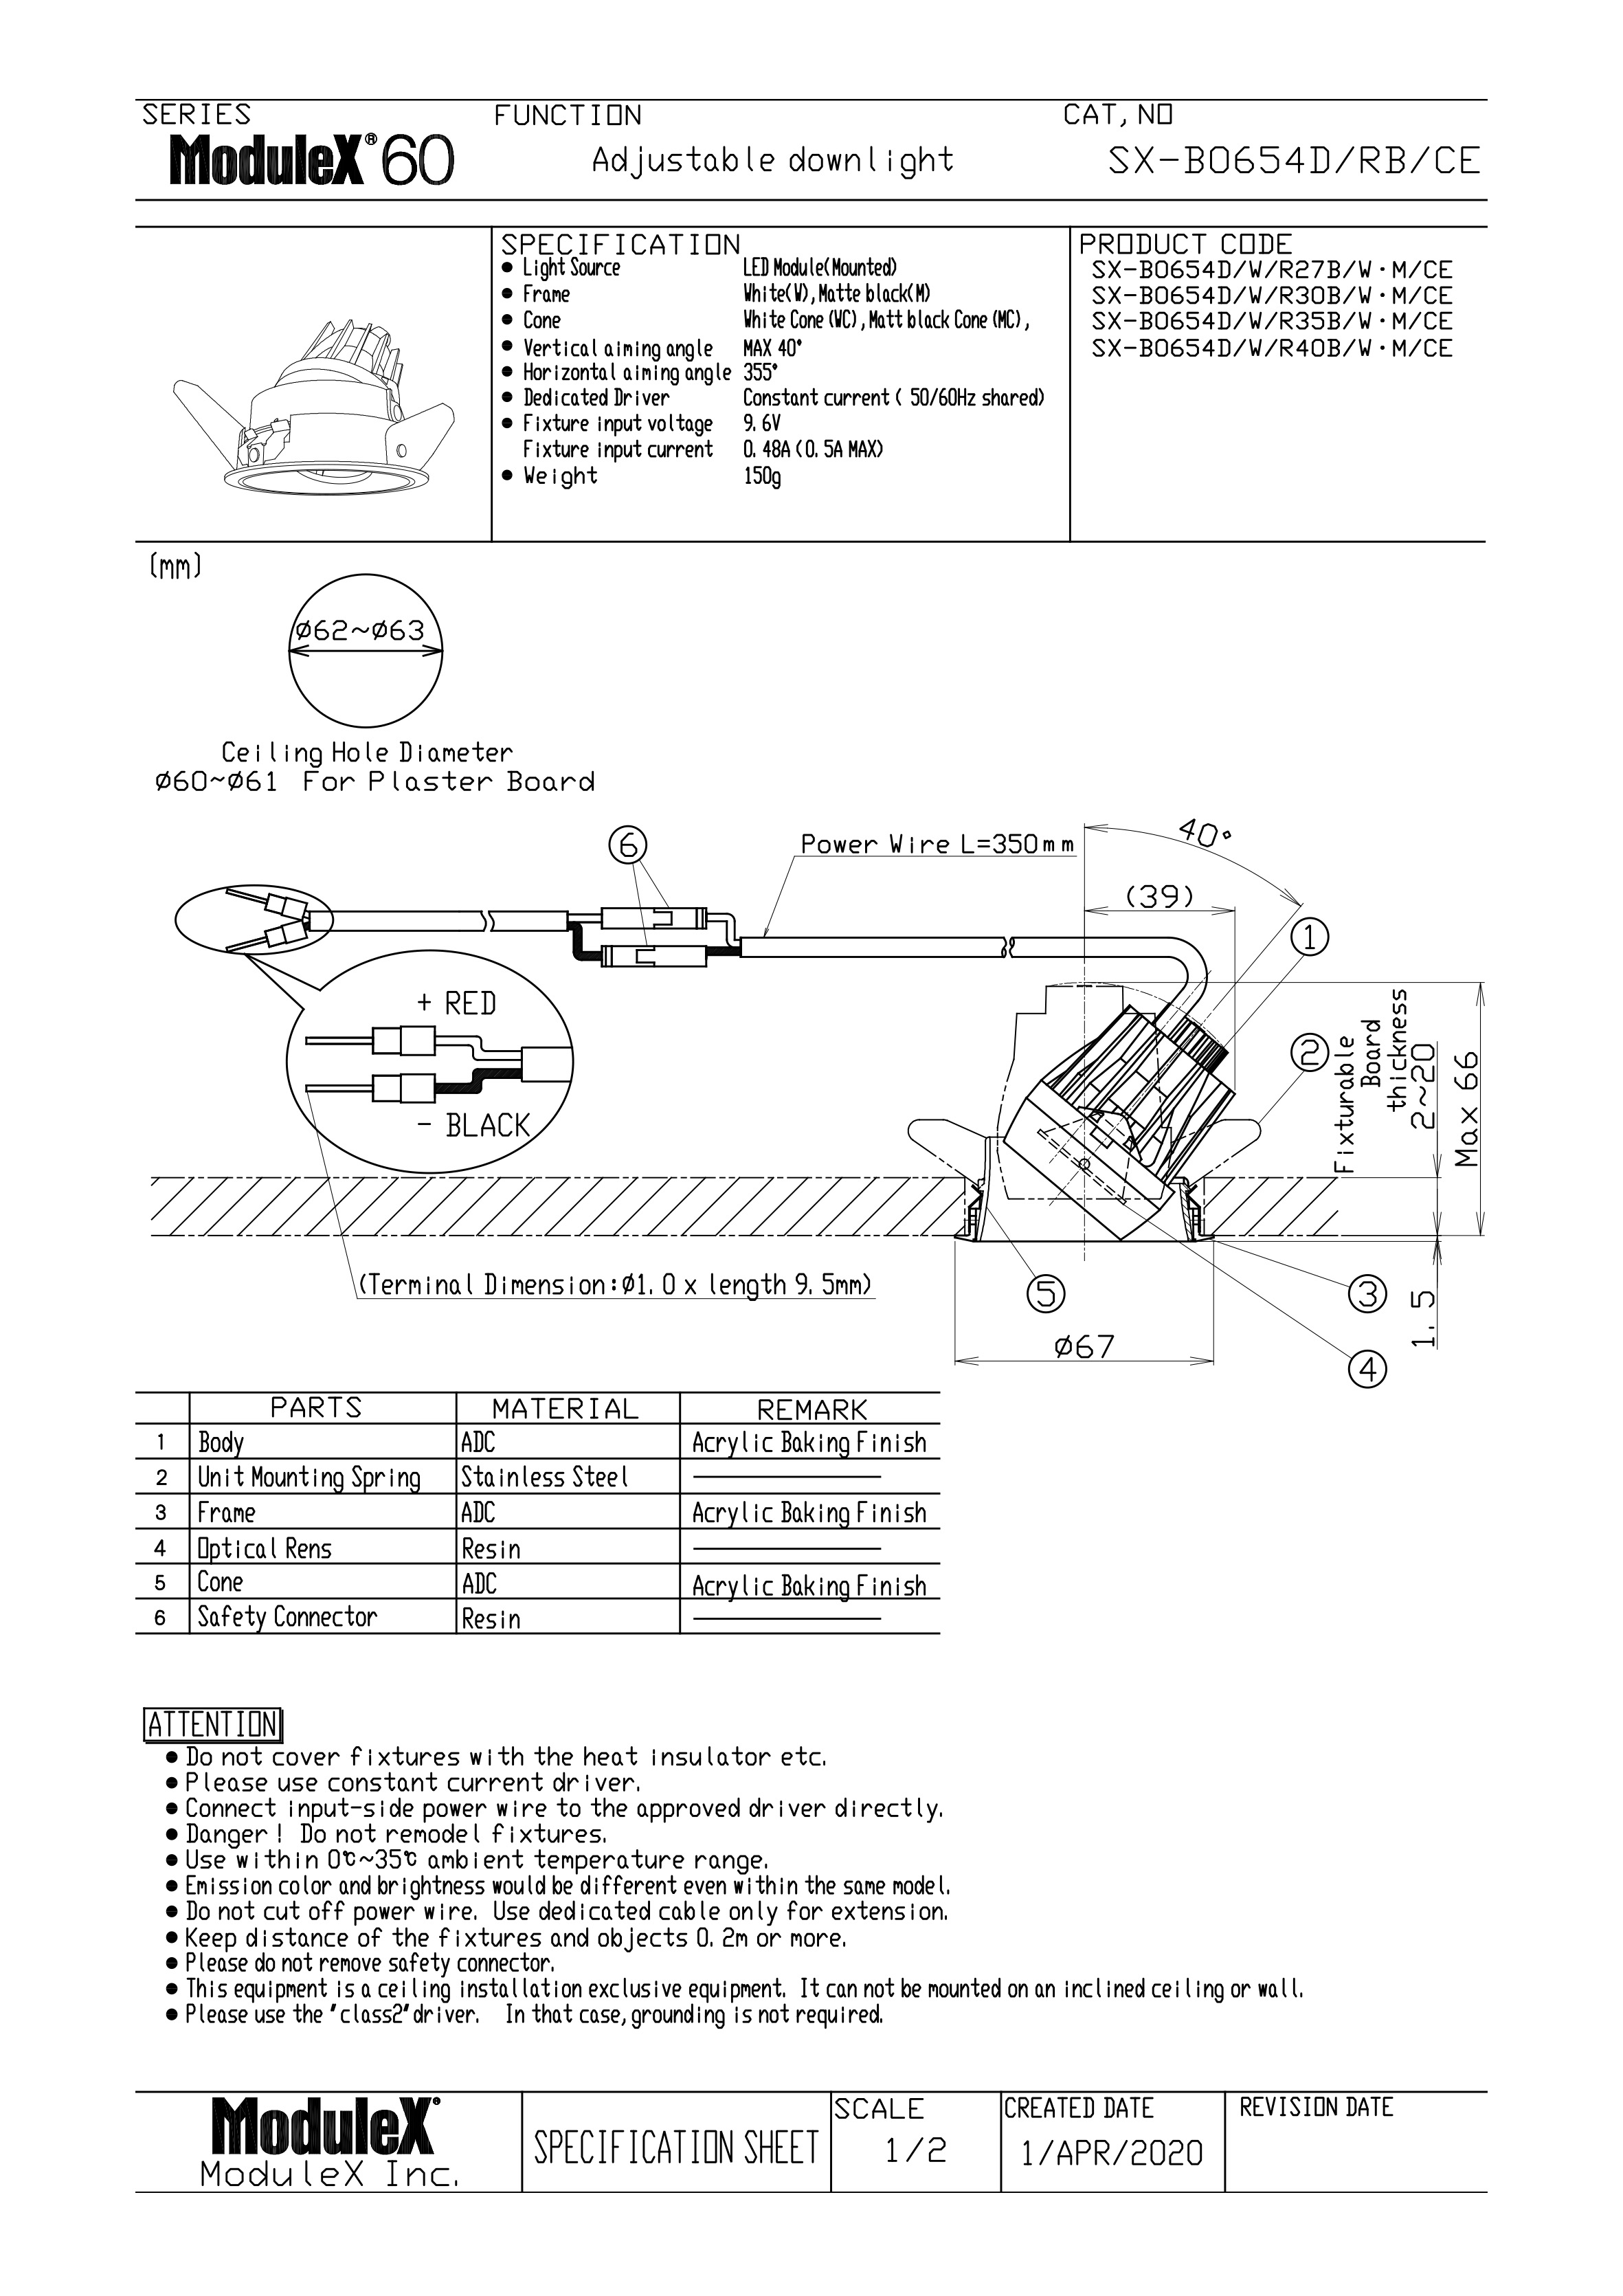 SX-B0654D Specification Sheet